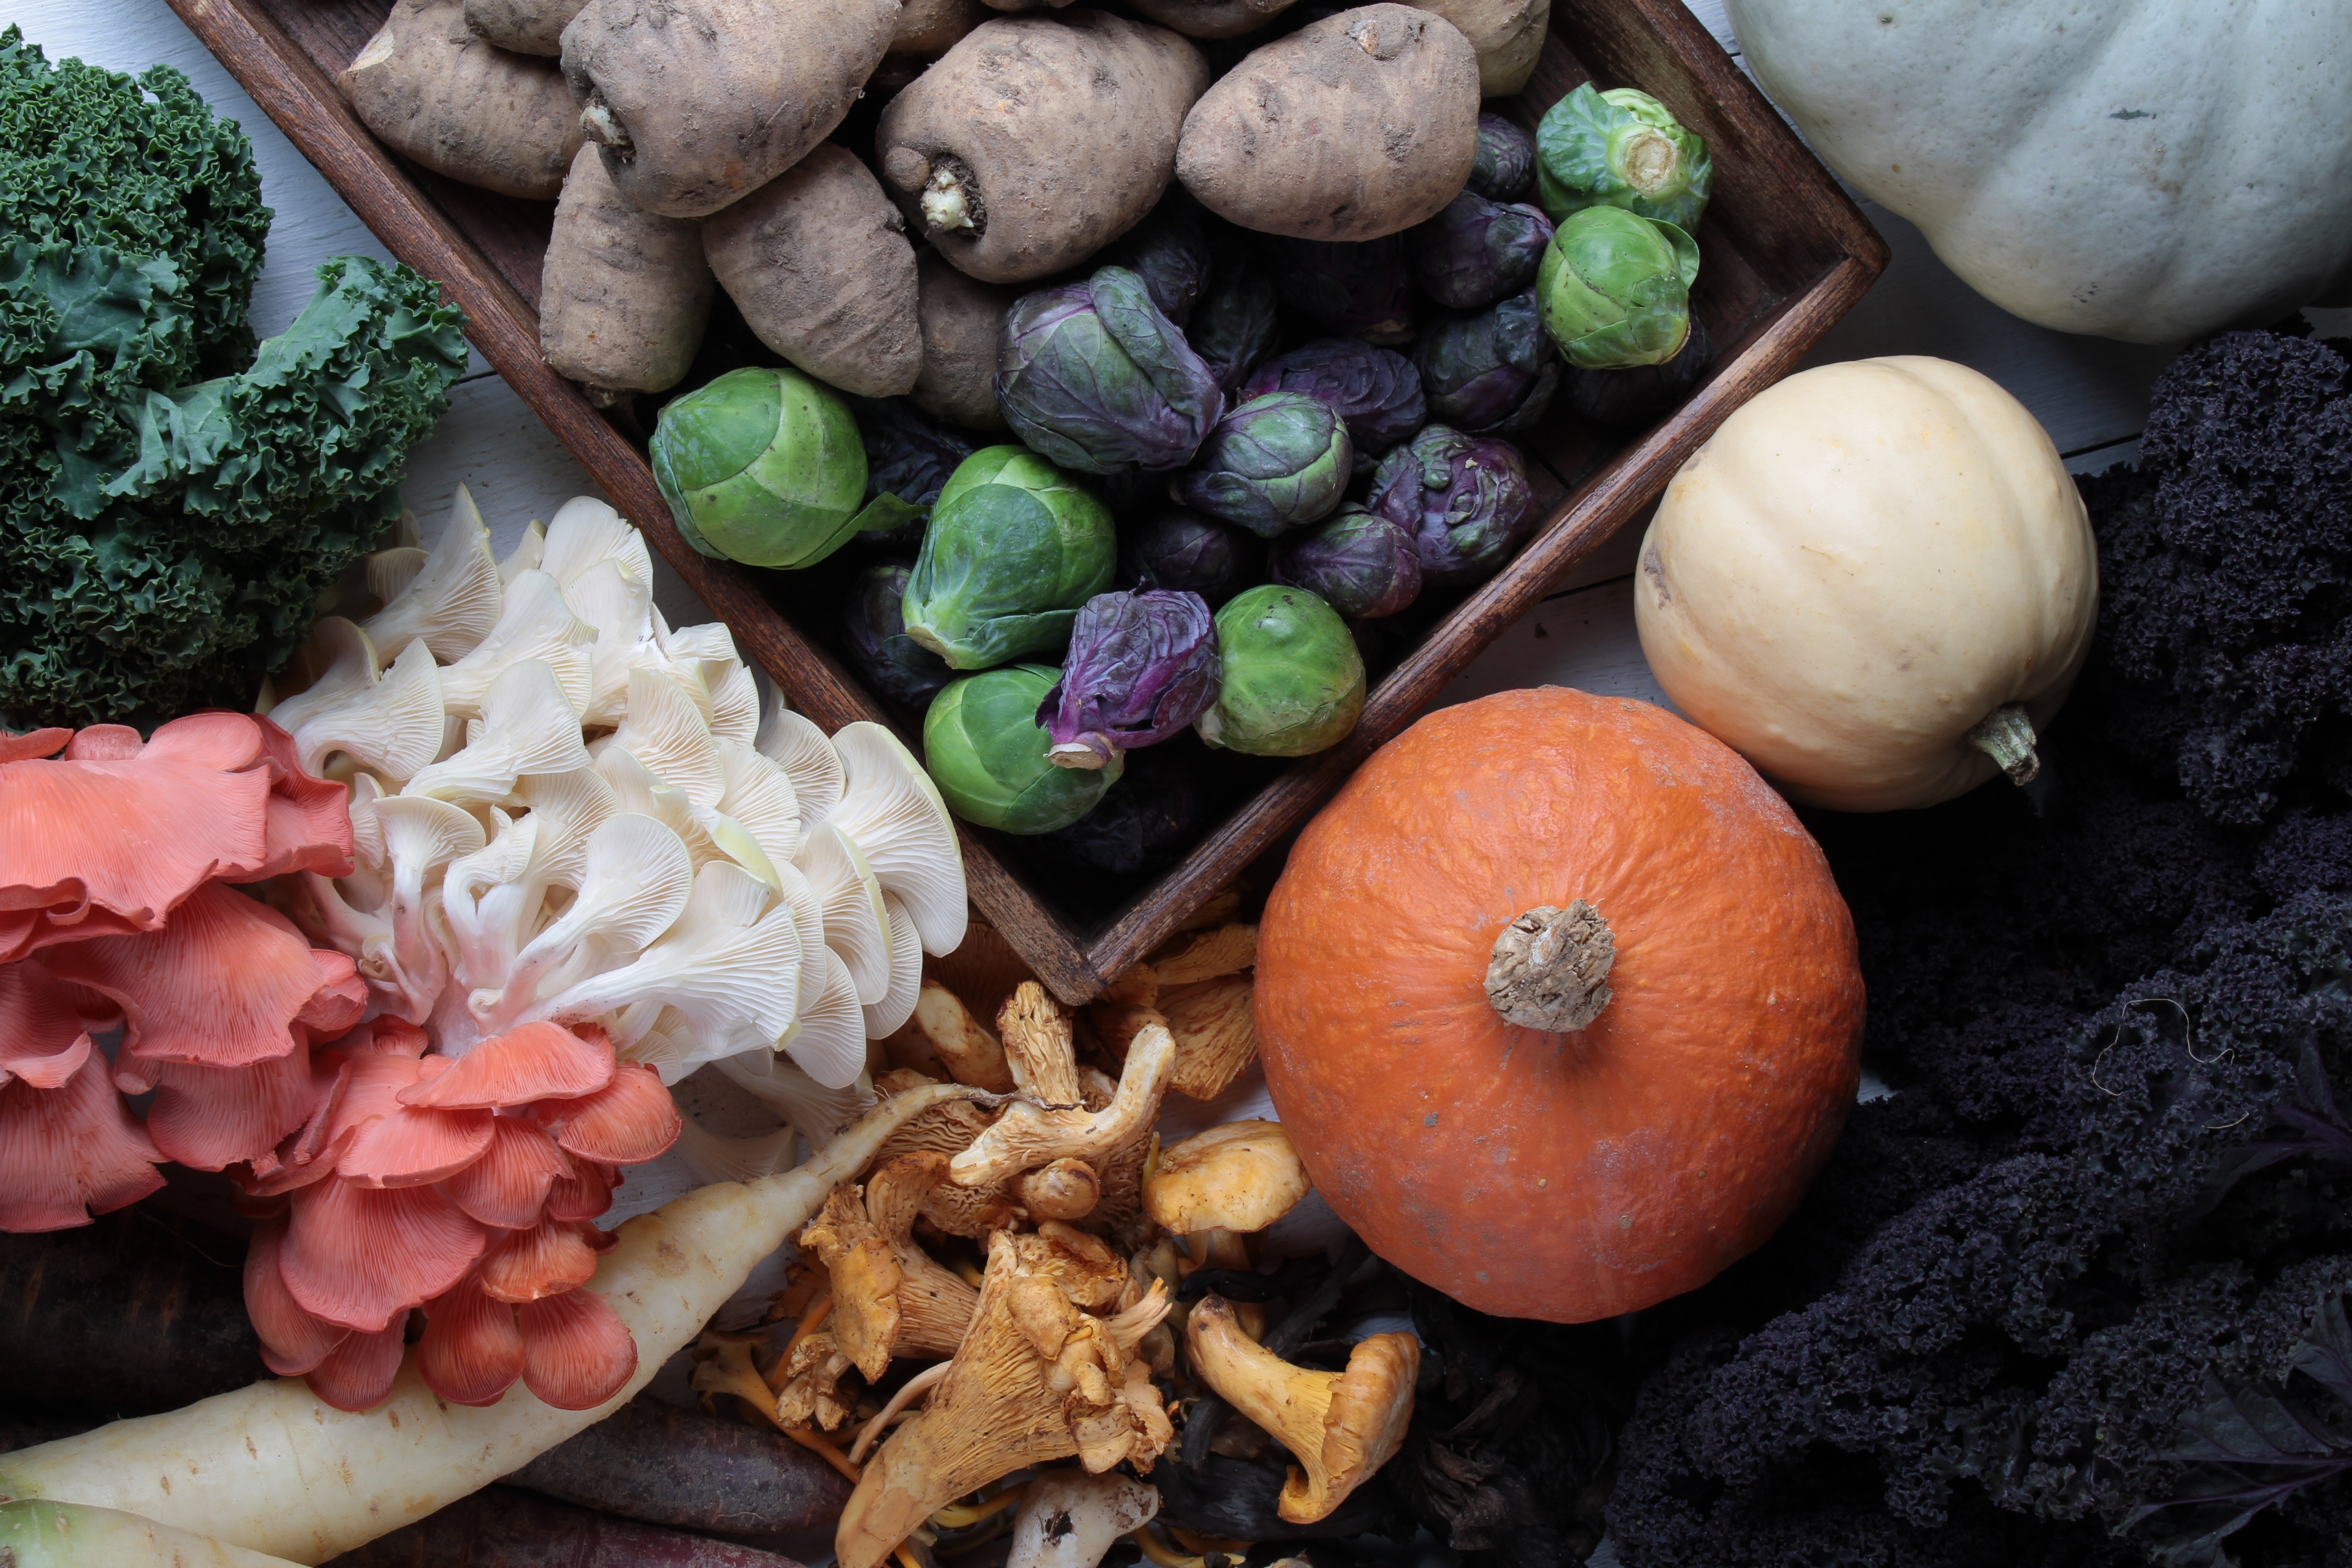 mixed seasonal vegetables including wild mushrooms